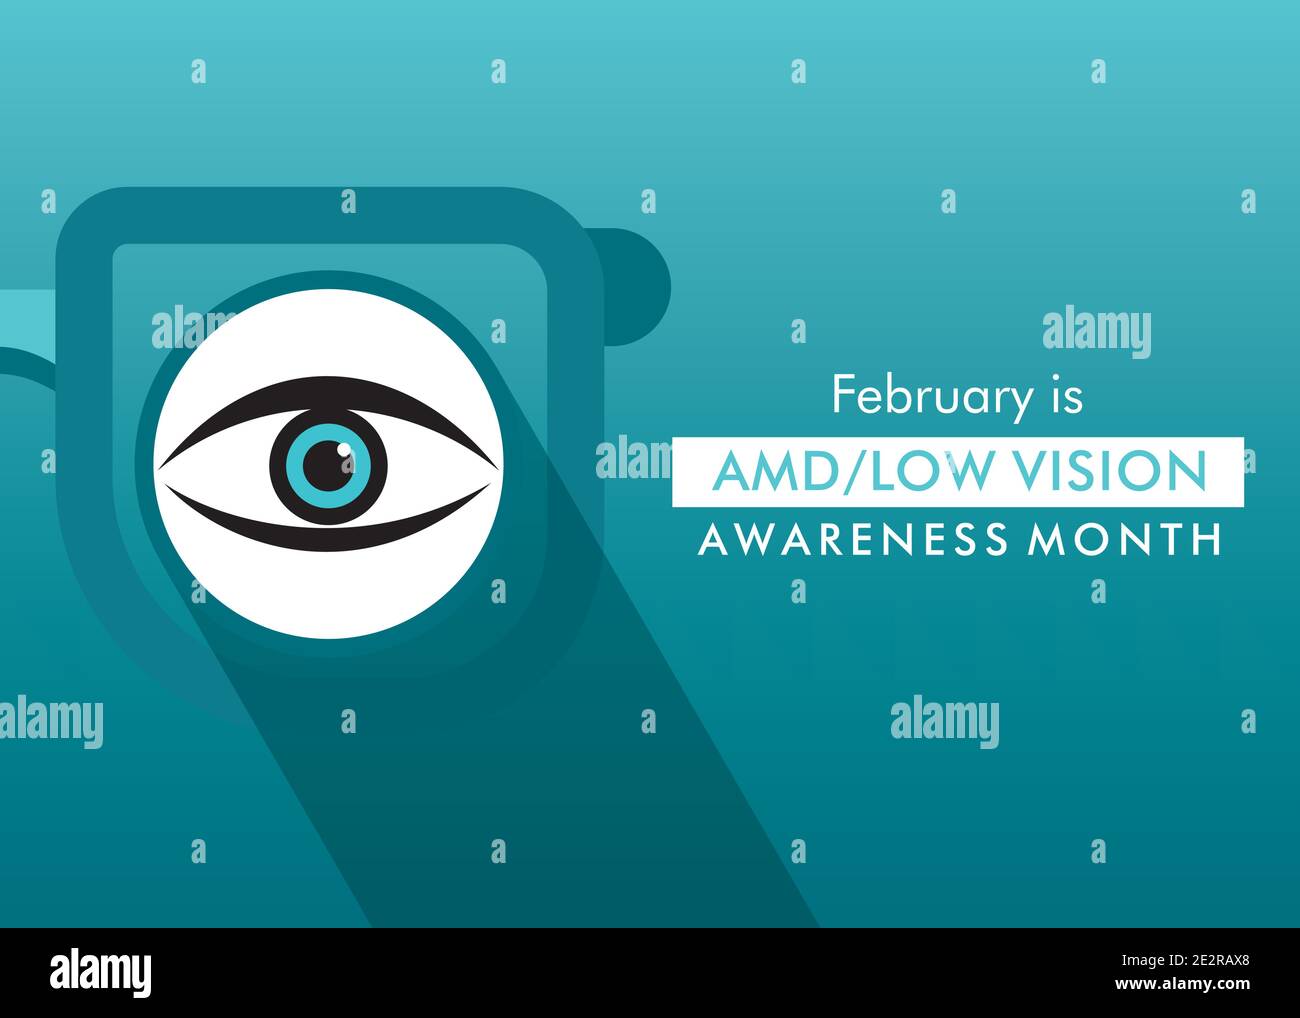 vektor-Illustration von AMD oder Low Vision Awareness Month Konzept Design Stock Vektor